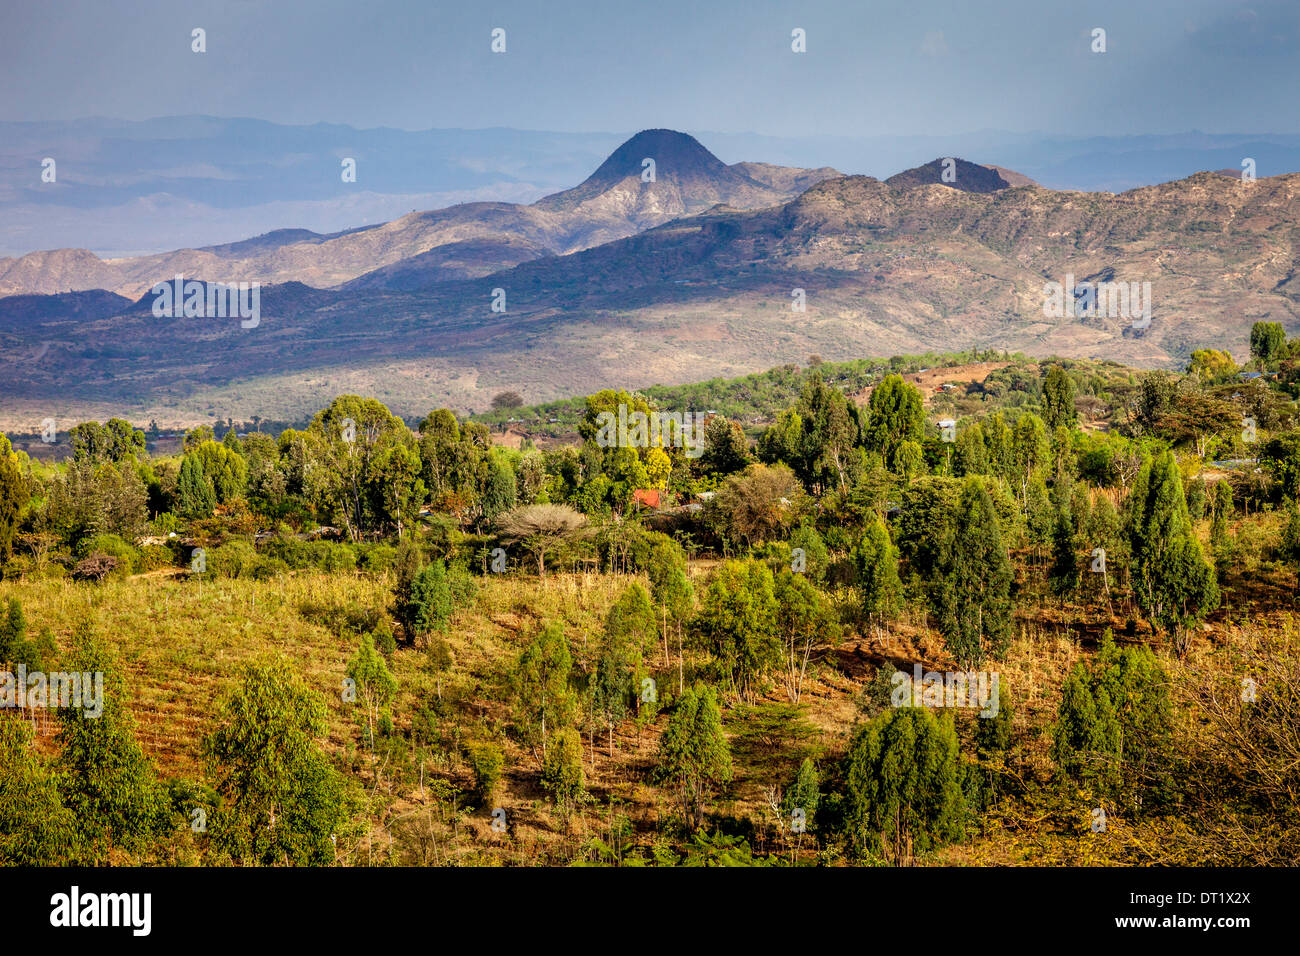 The Konso Landscape, Konso Region, Ethiopia Stock Photo